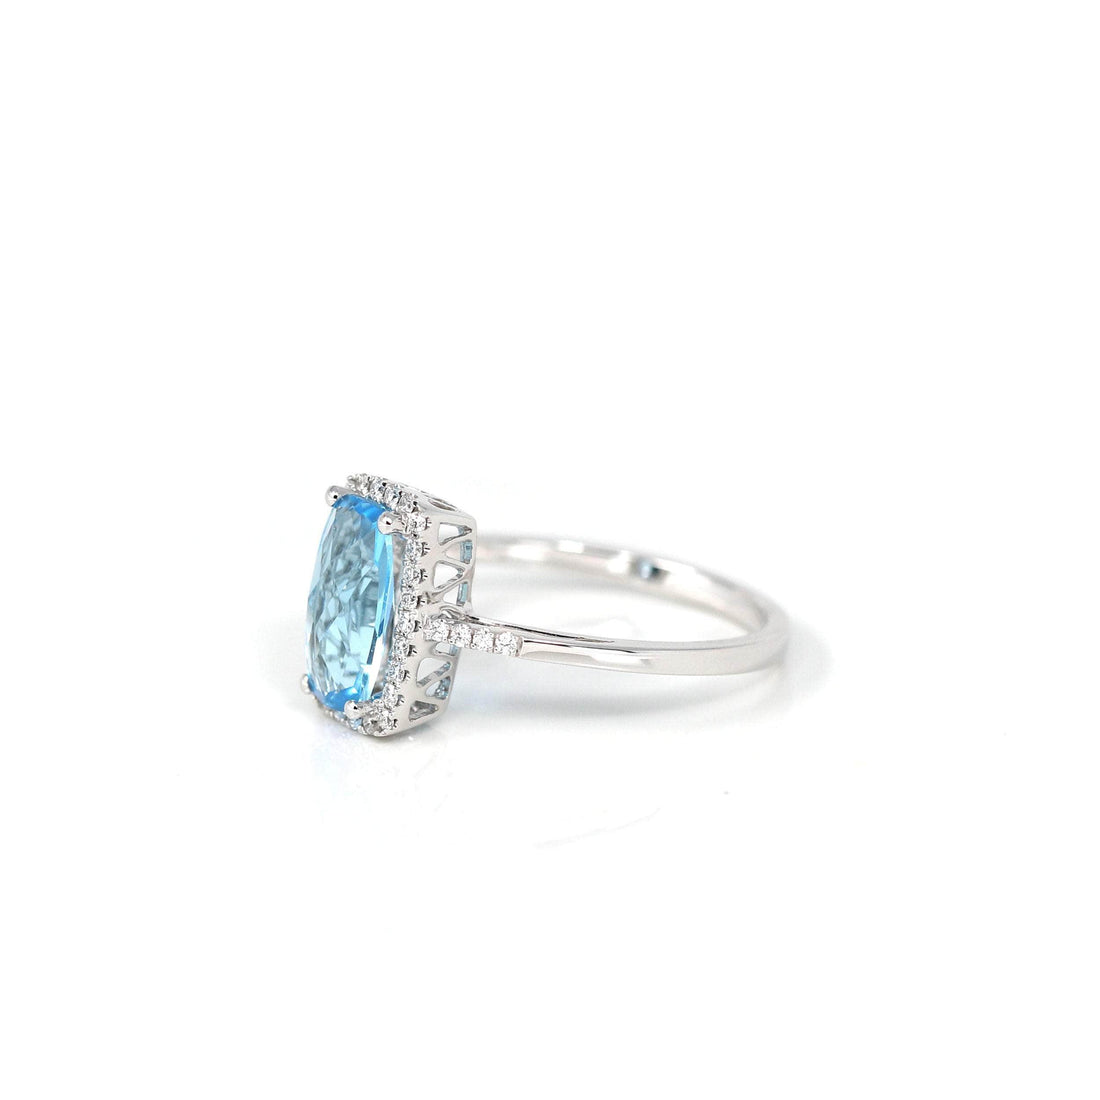 14k White Gold Genuine Swiss Blue Topaz Ring with Diamonds